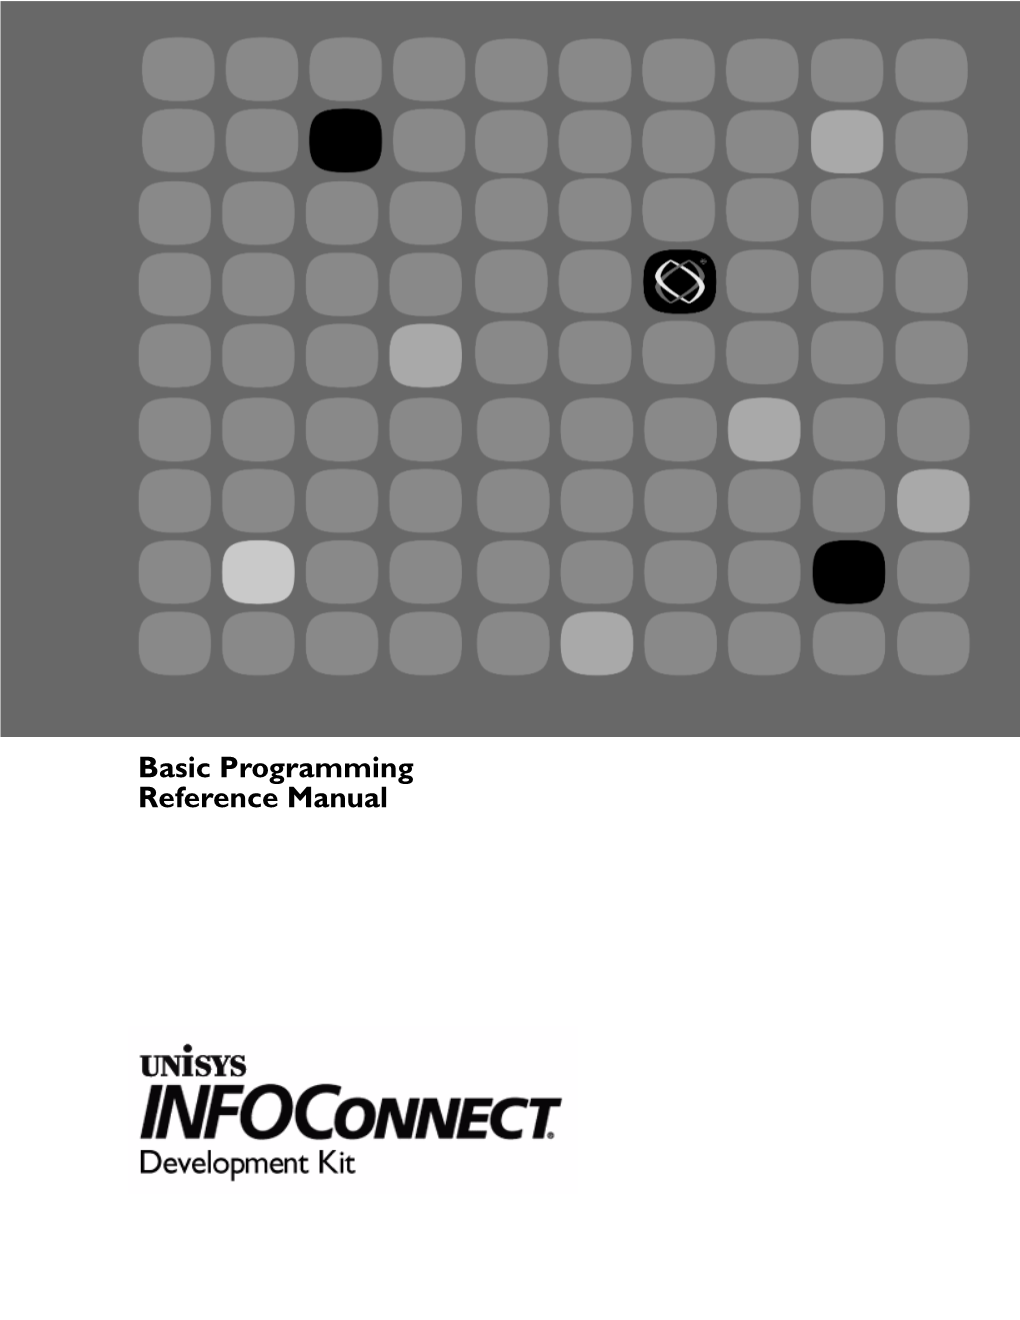 Basic Programming Reference Manual